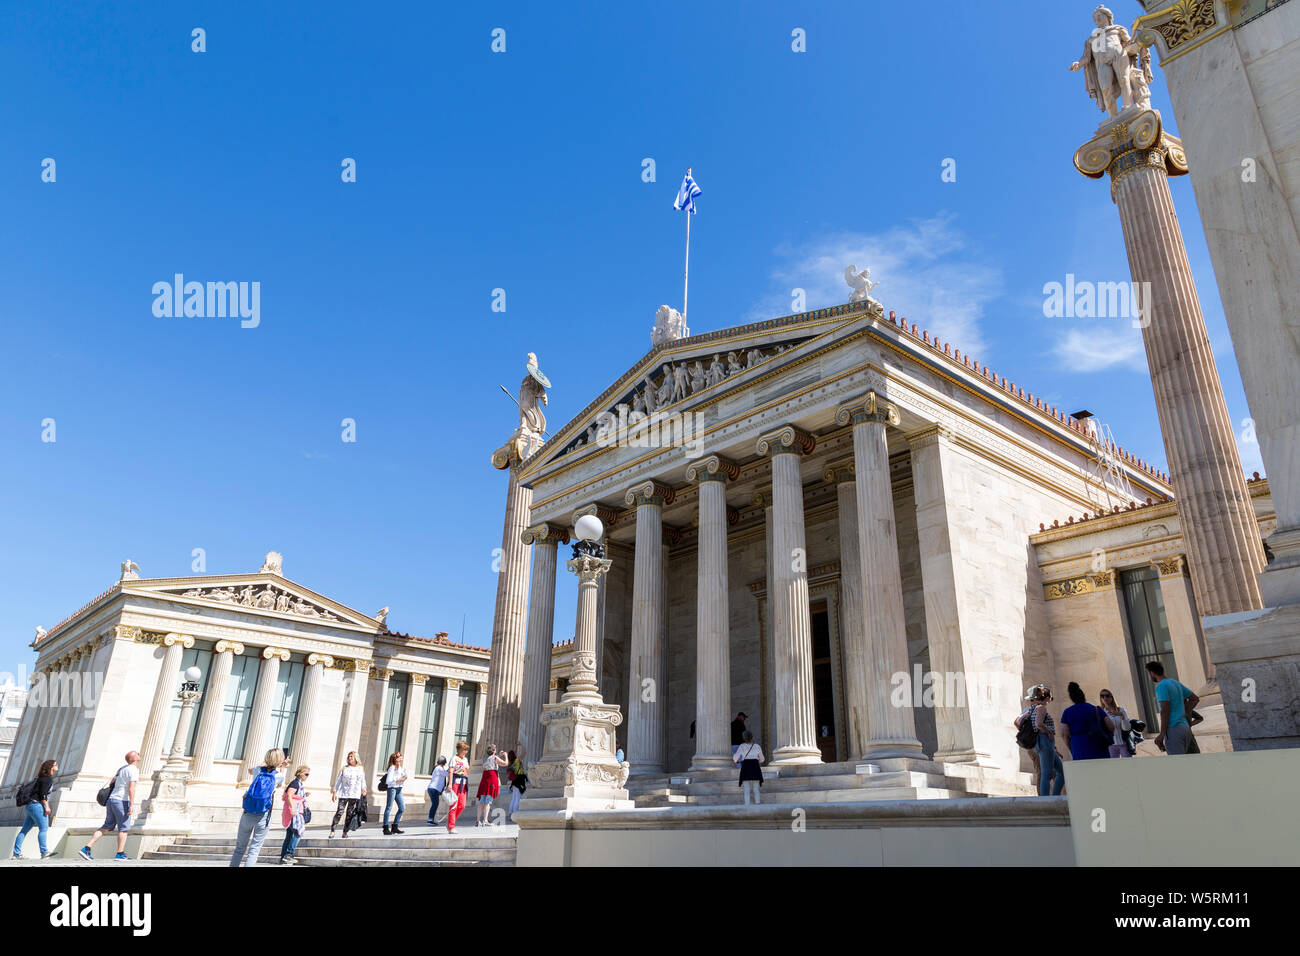 Athen, Griechenland - 1. Mai 2019: Menschen um das Gebäude der Akademie von Athen in Athen, Griechenland. Stockfoto